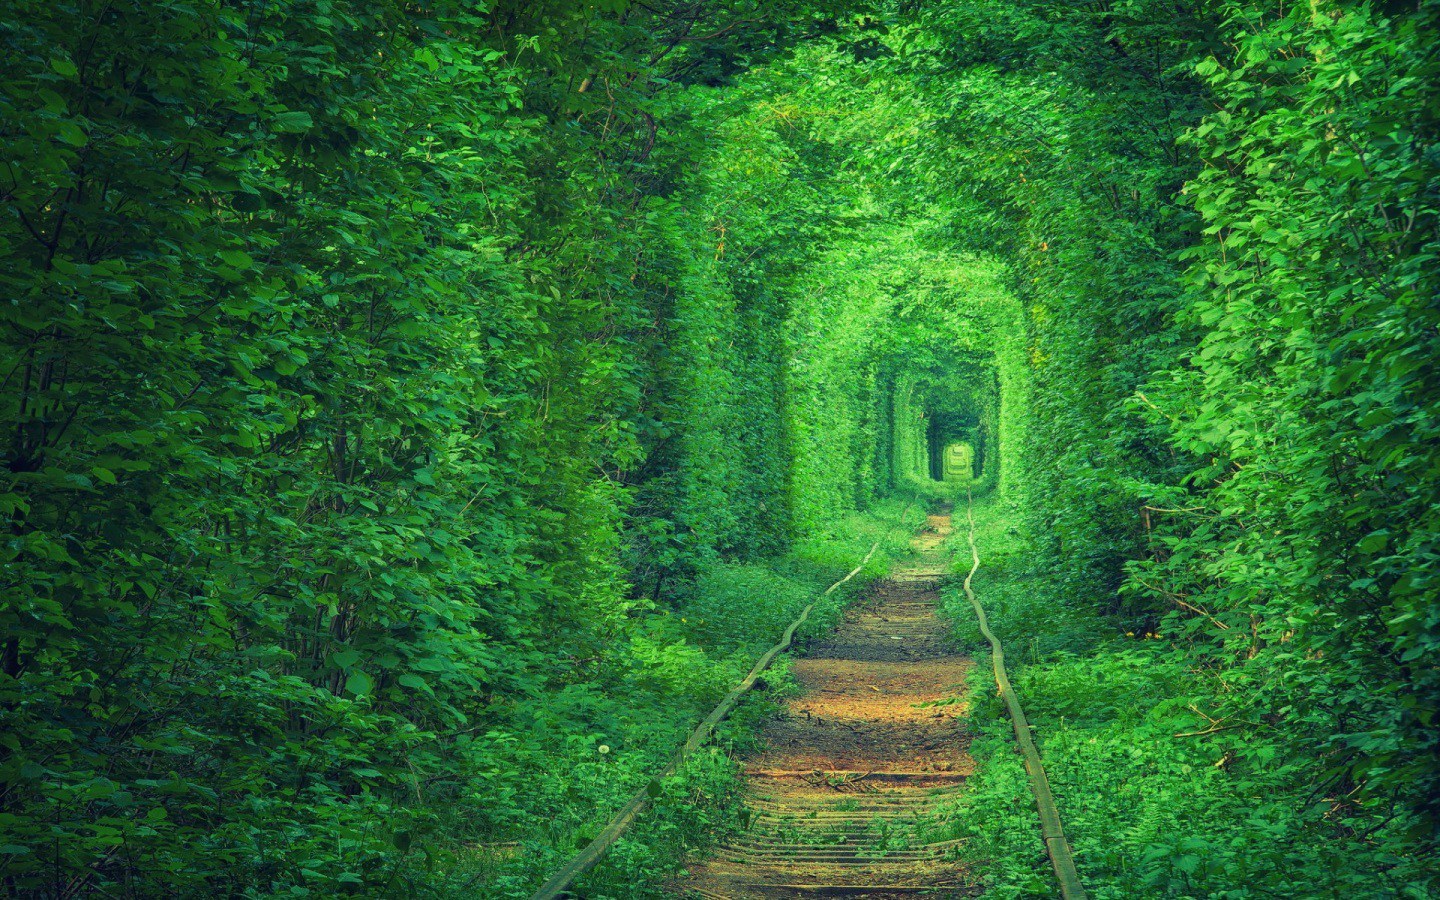 Tunnel of Love, in Ukraine